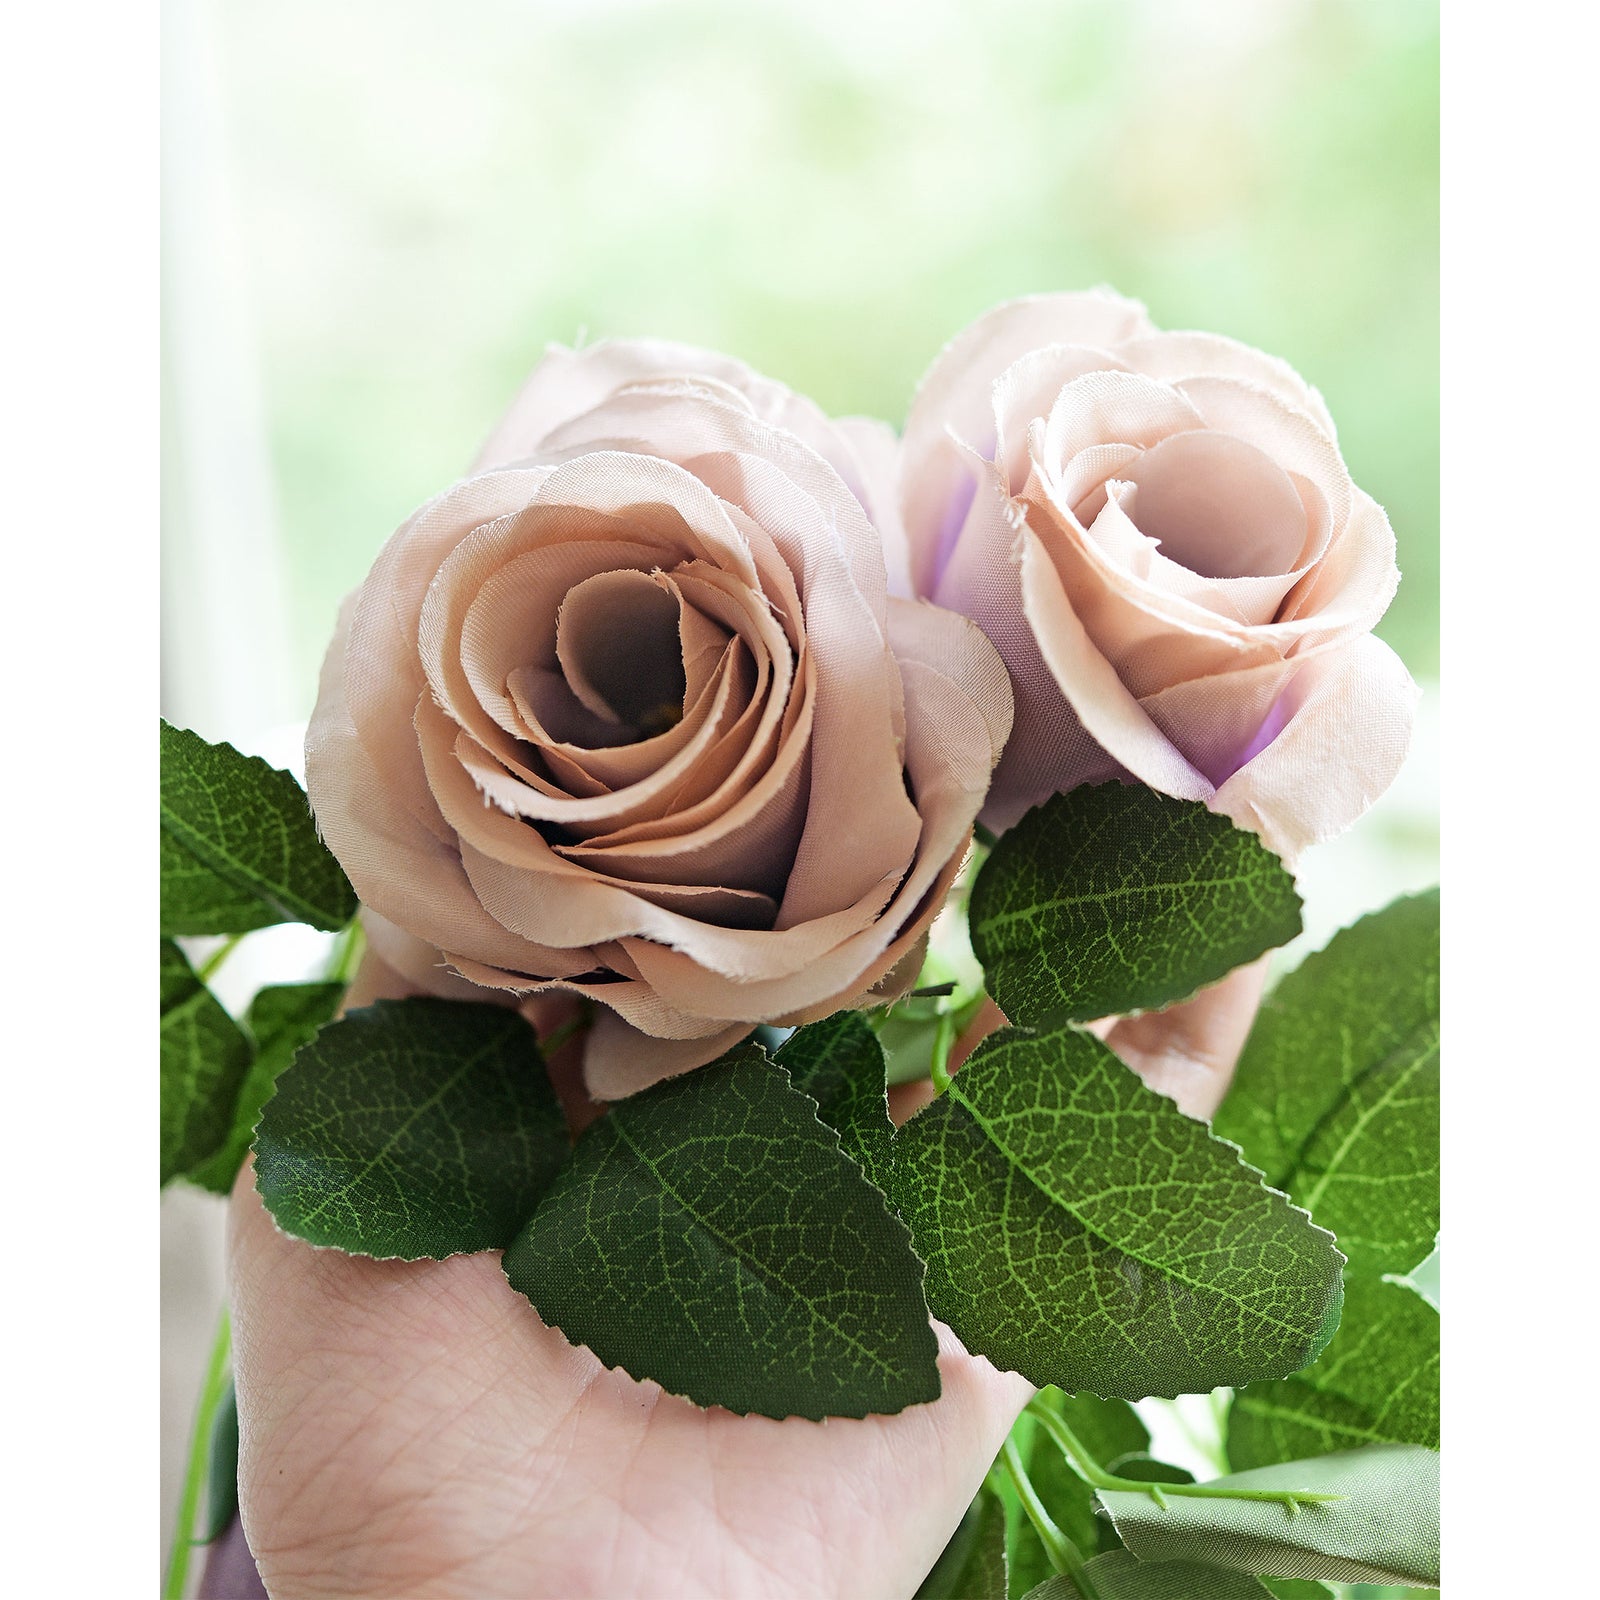 Artificial Silk Rose Garlands Vine Plant Flower Leaves (Smoky Purple) 2 Pcs